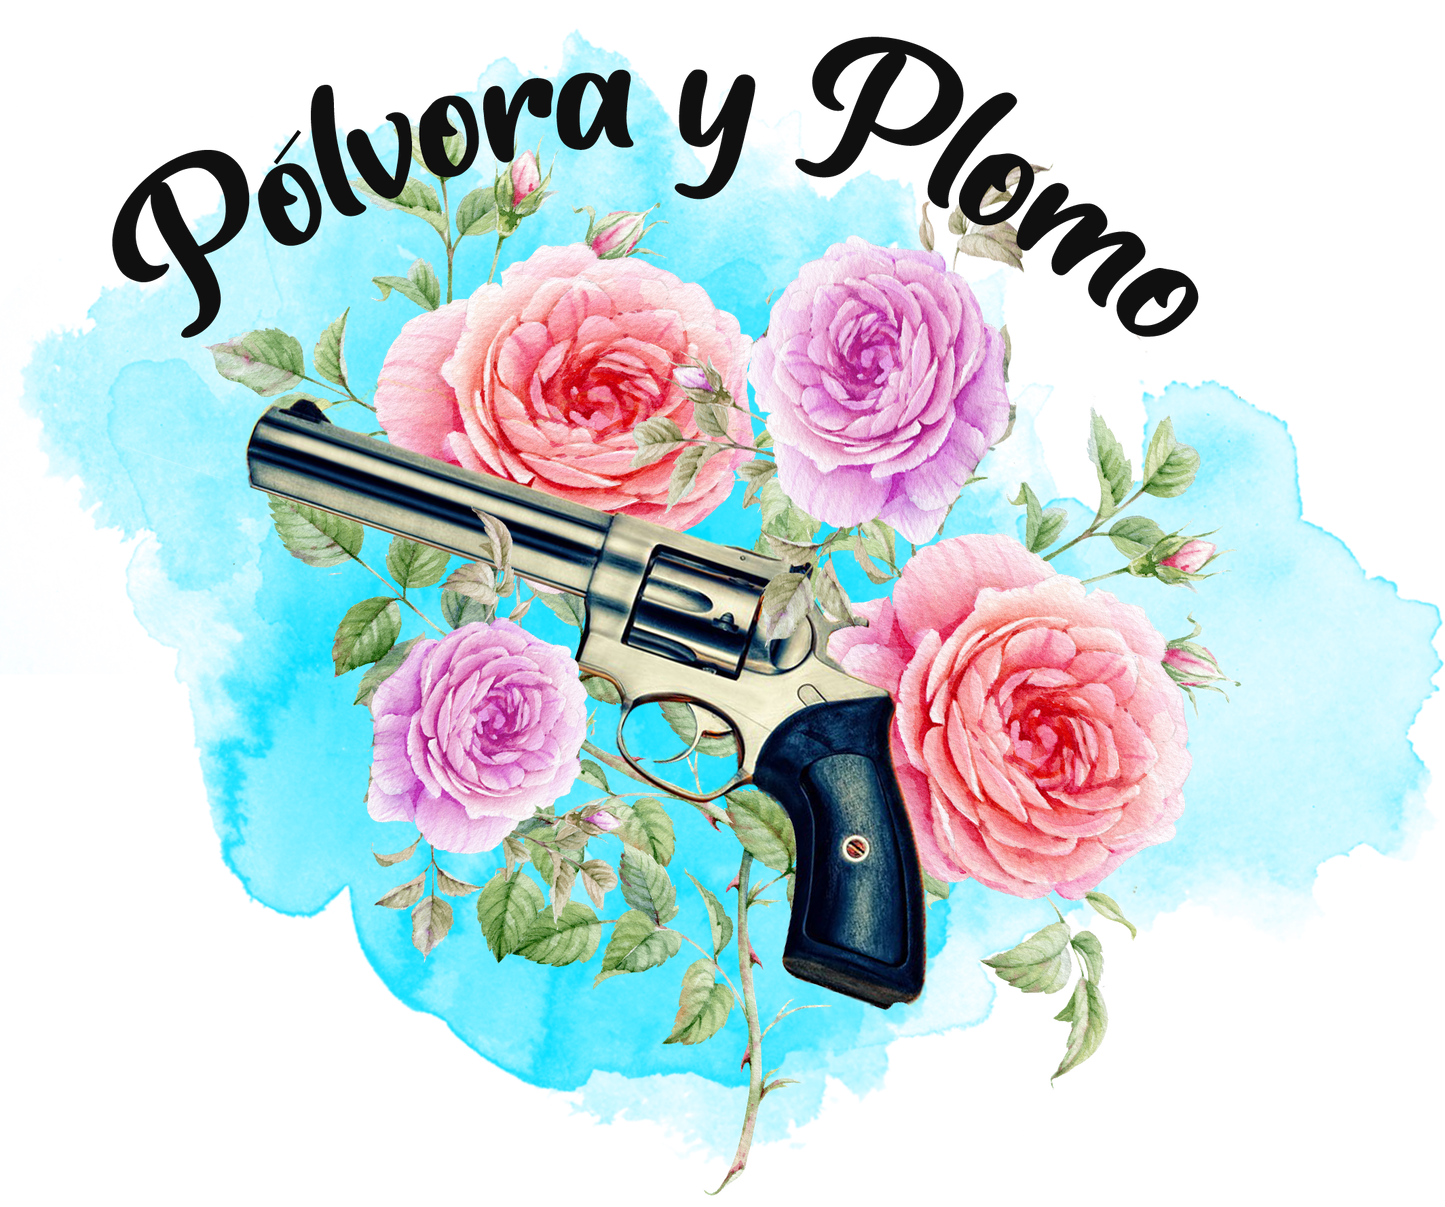 Polvora y Plomo .svg digital download artwork